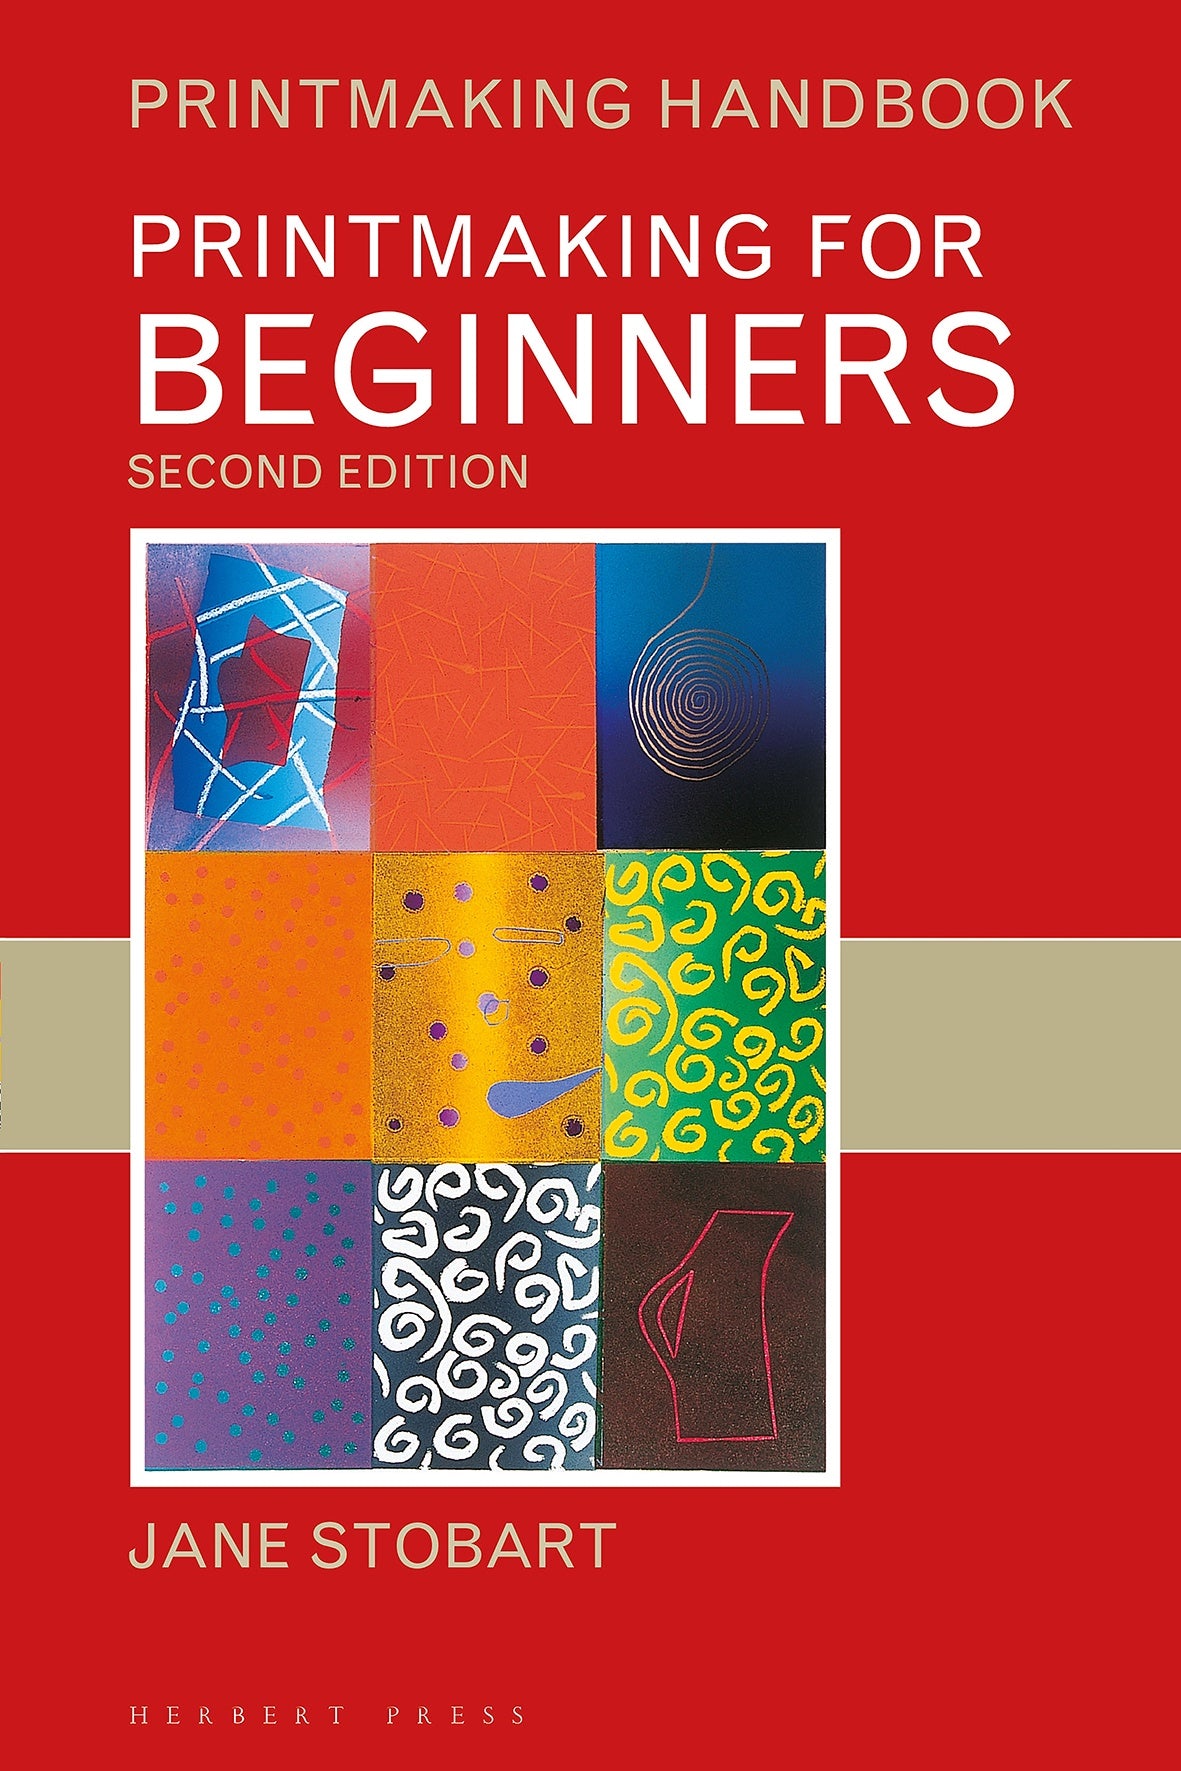 Printmaking for Beginners by Jane Stobart